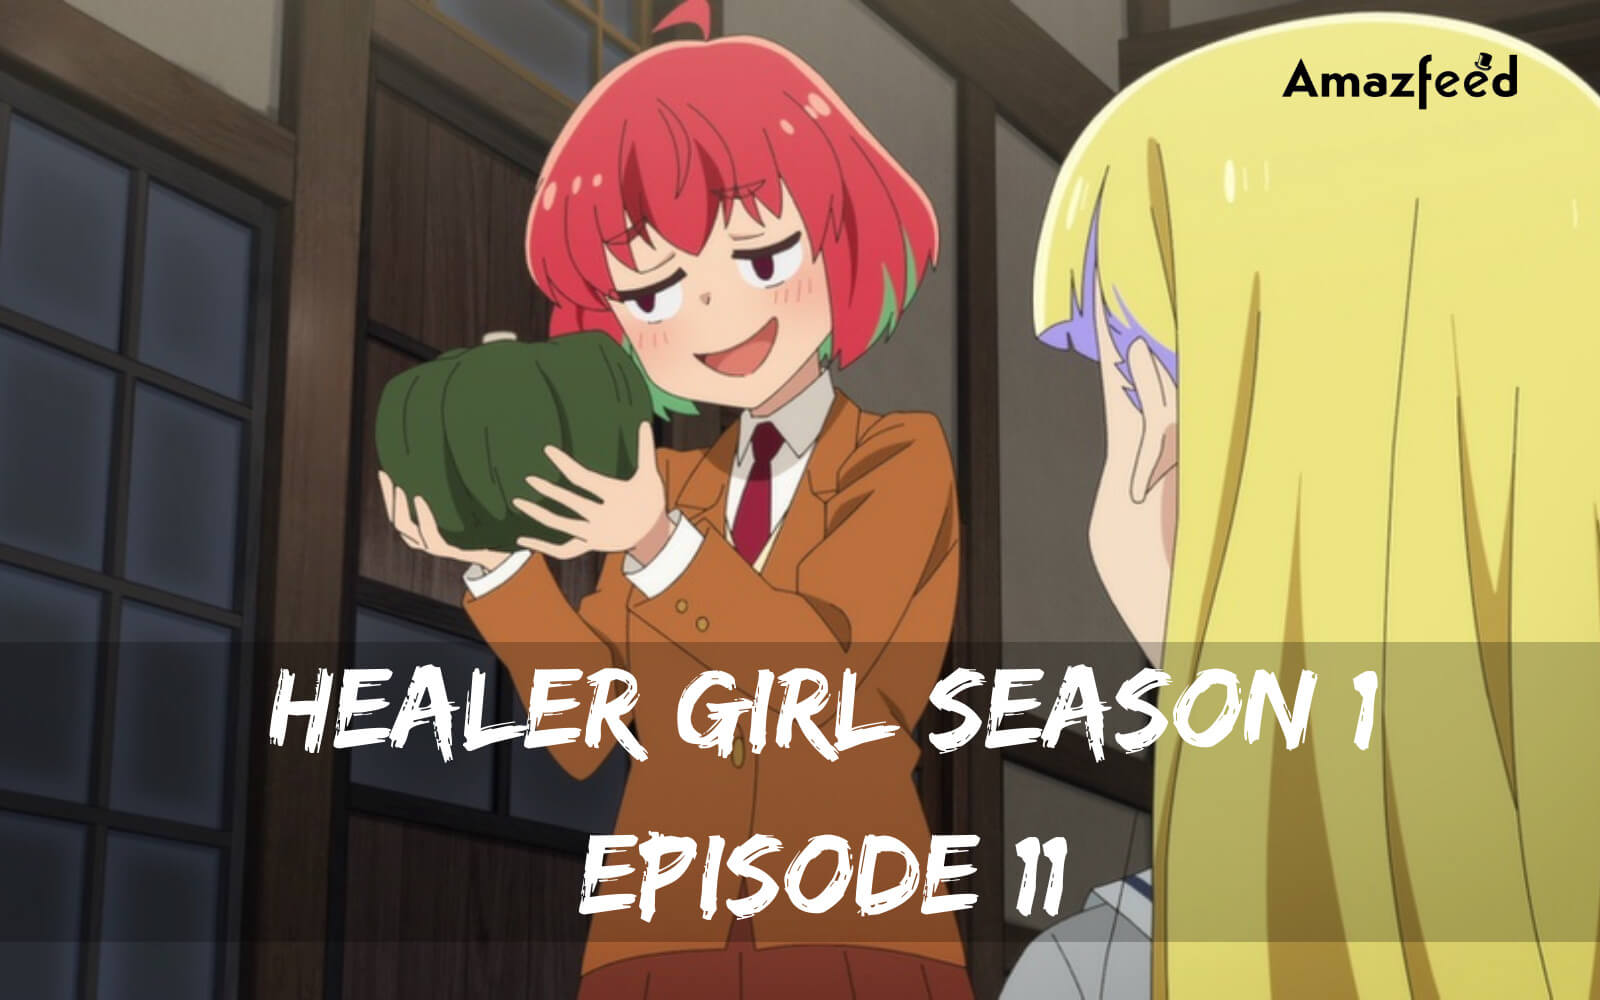 Healer Girl season 1 Episode 11 release date